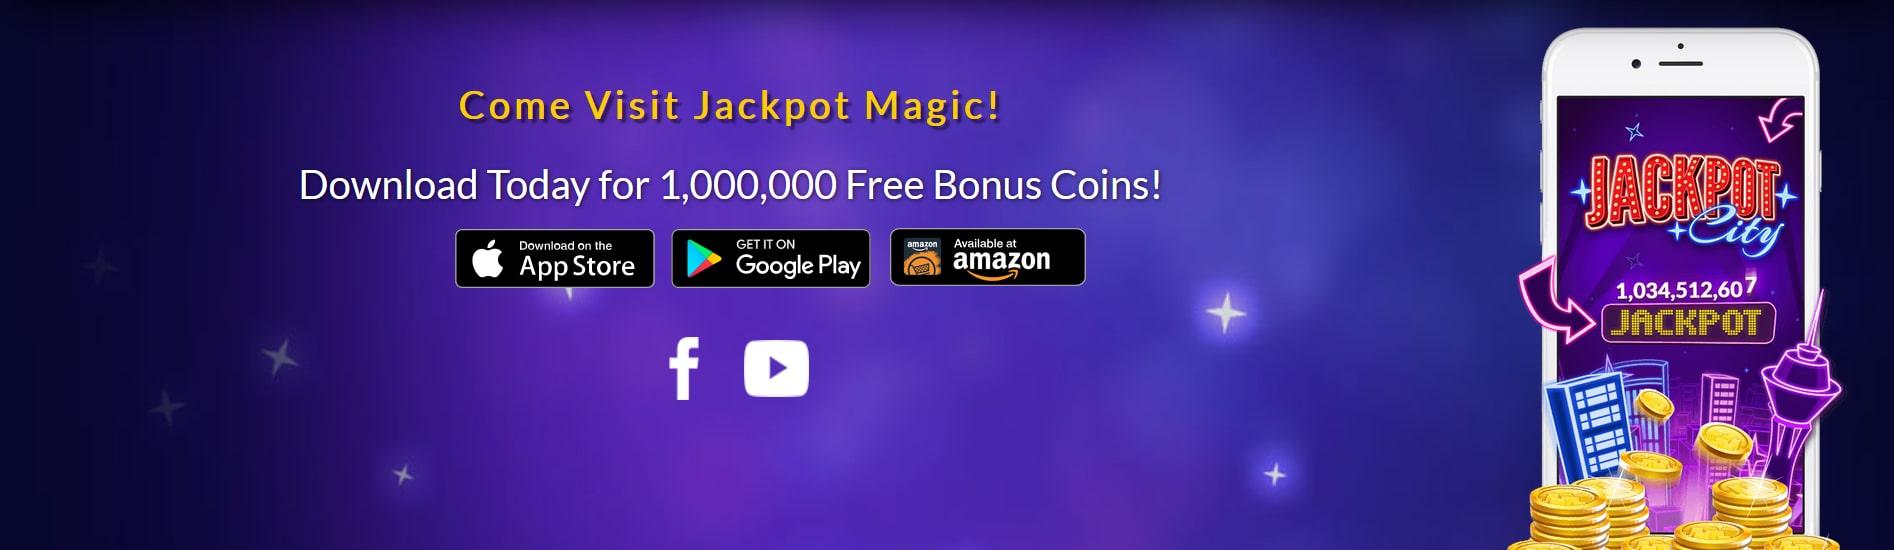 Jackpot Magic Slots Mobile App